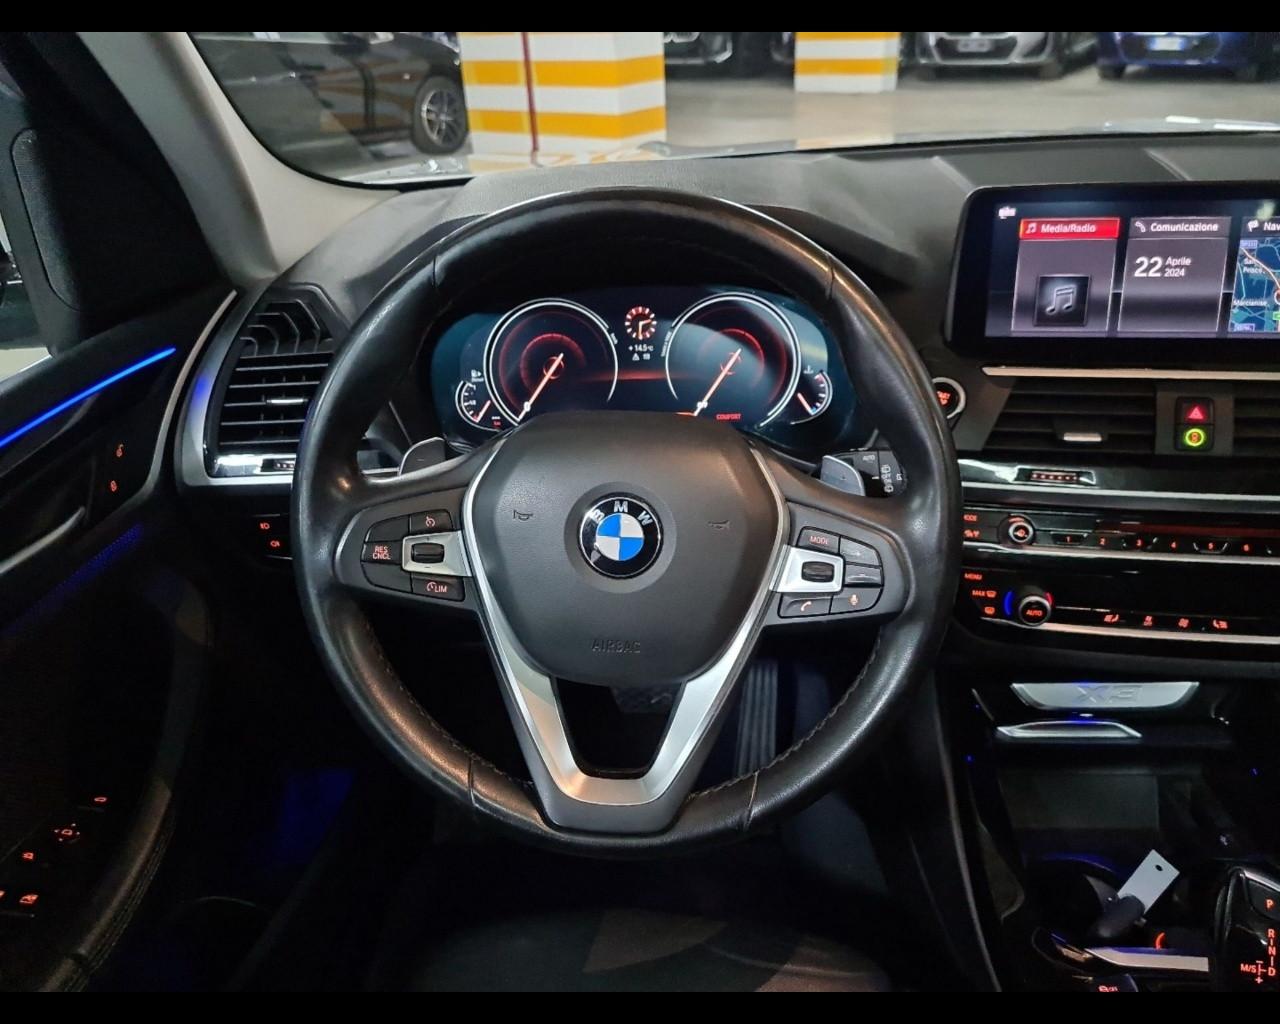 BMW X3 G01 2017 25D XLINE